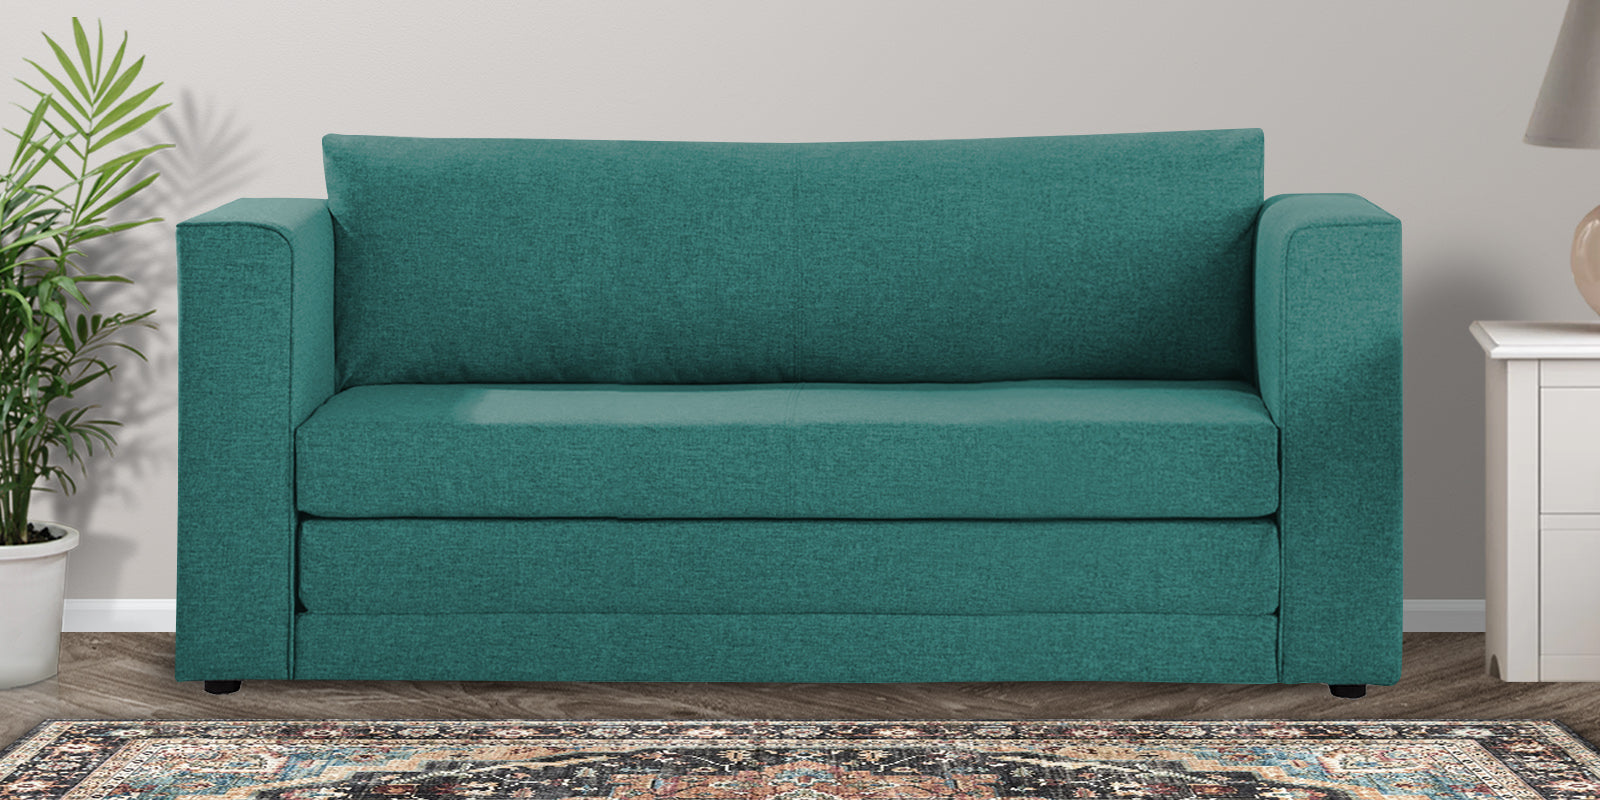 Kenia Fabric 3 Seater Convertible Sofa Cum Bed in Sea Green Colour